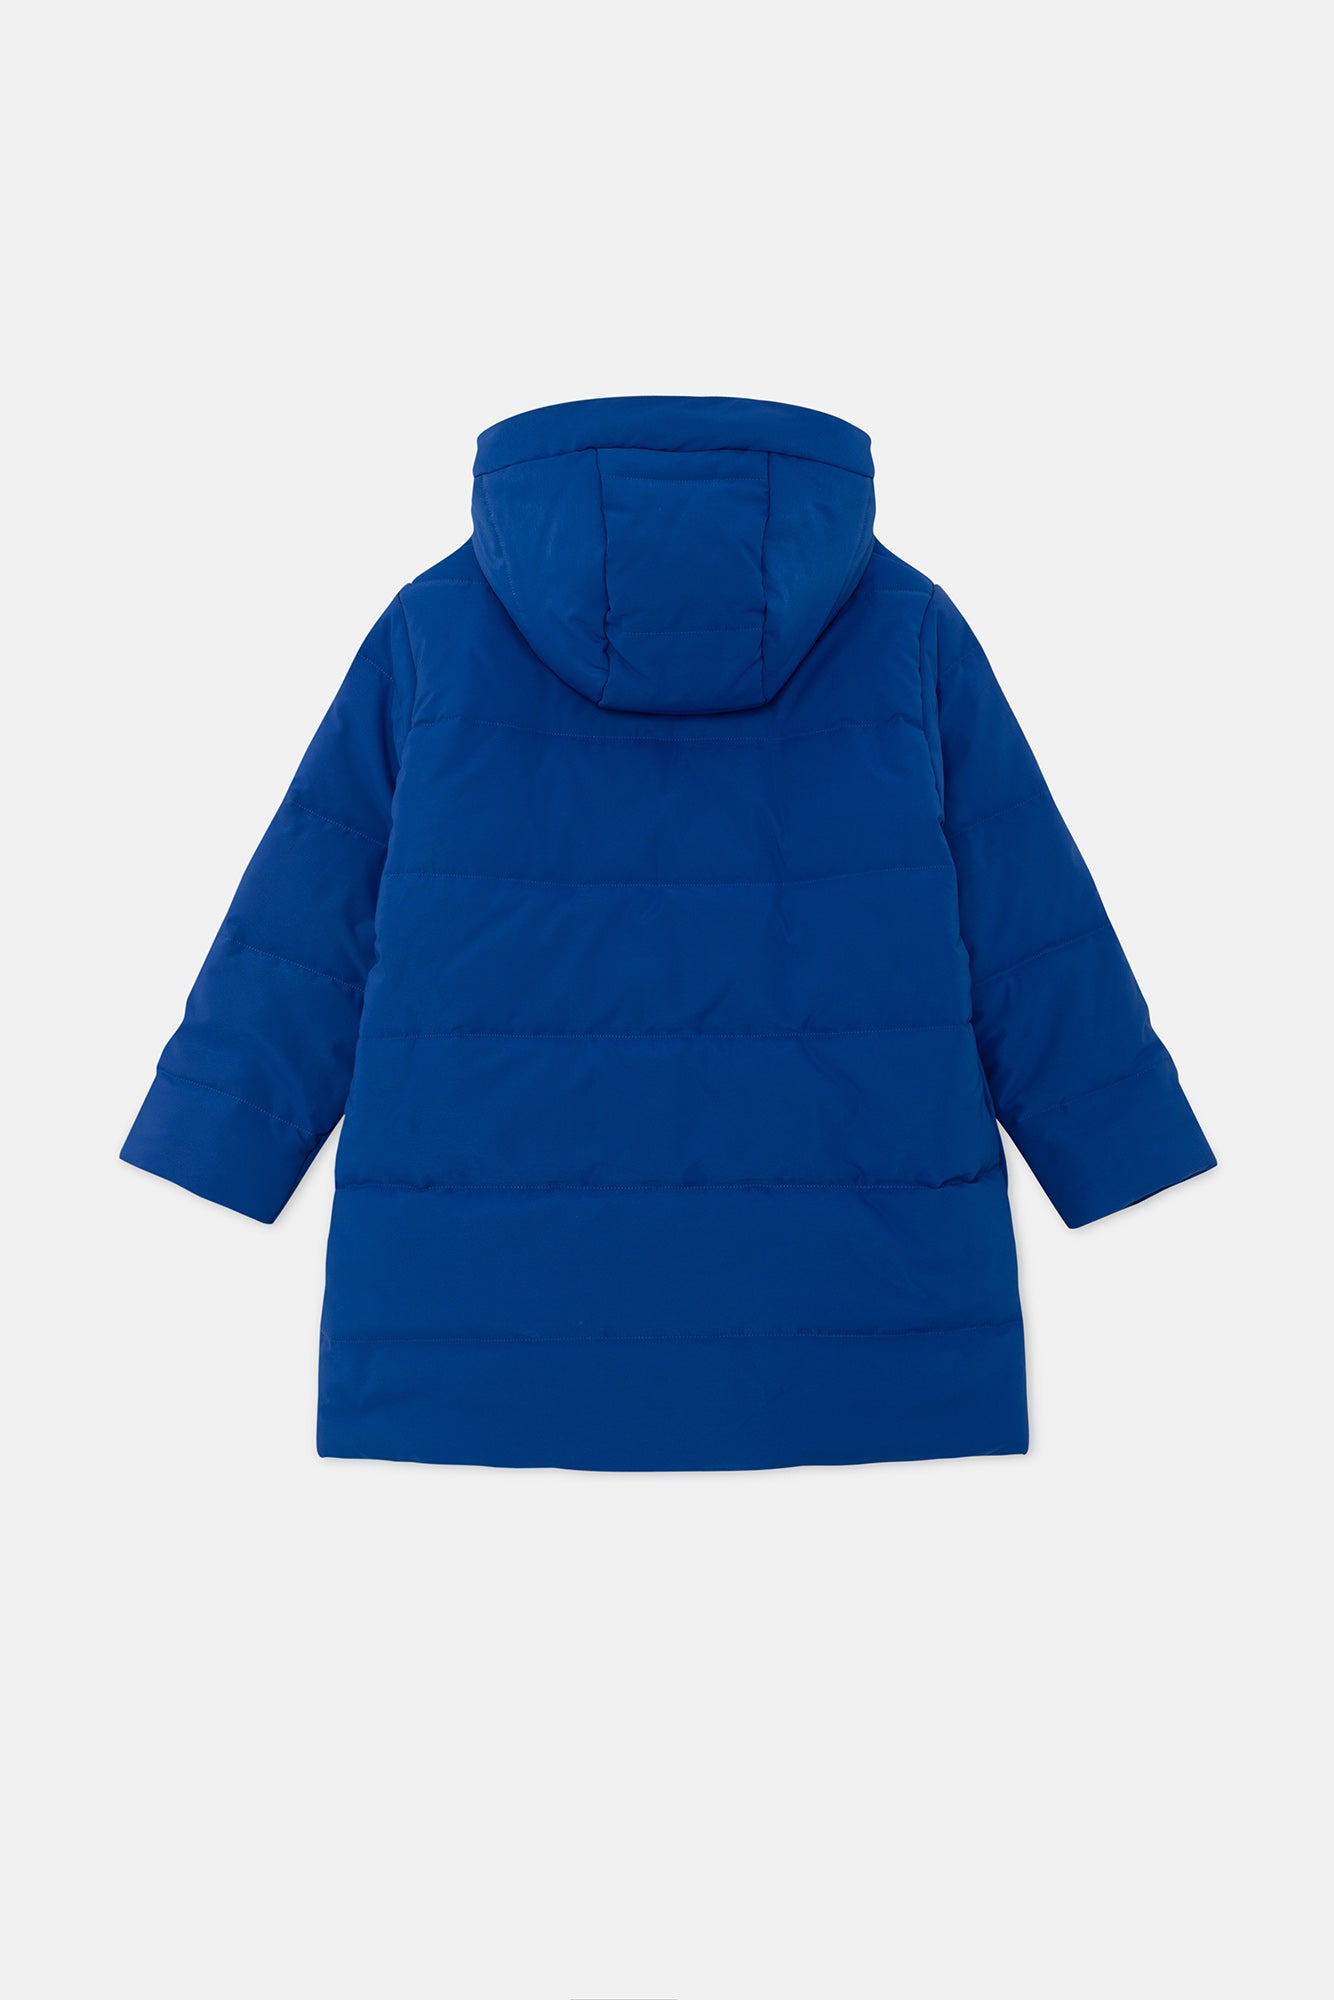 Abrigo unisex plumífero midi con capucha azul